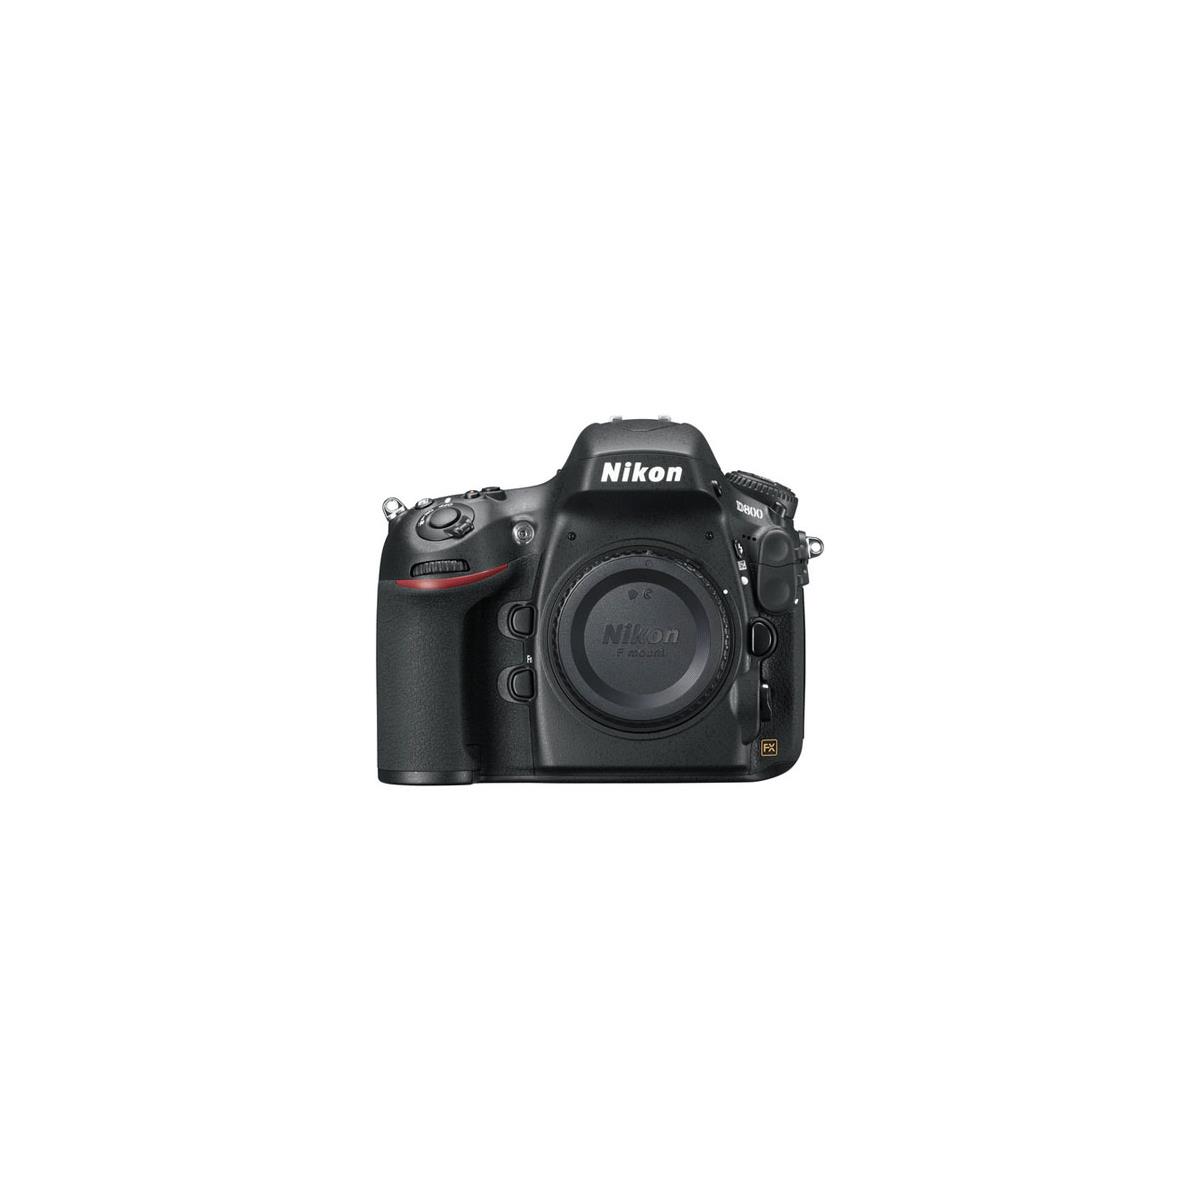 Image of Nikon D800E Digital SLR Camera Body